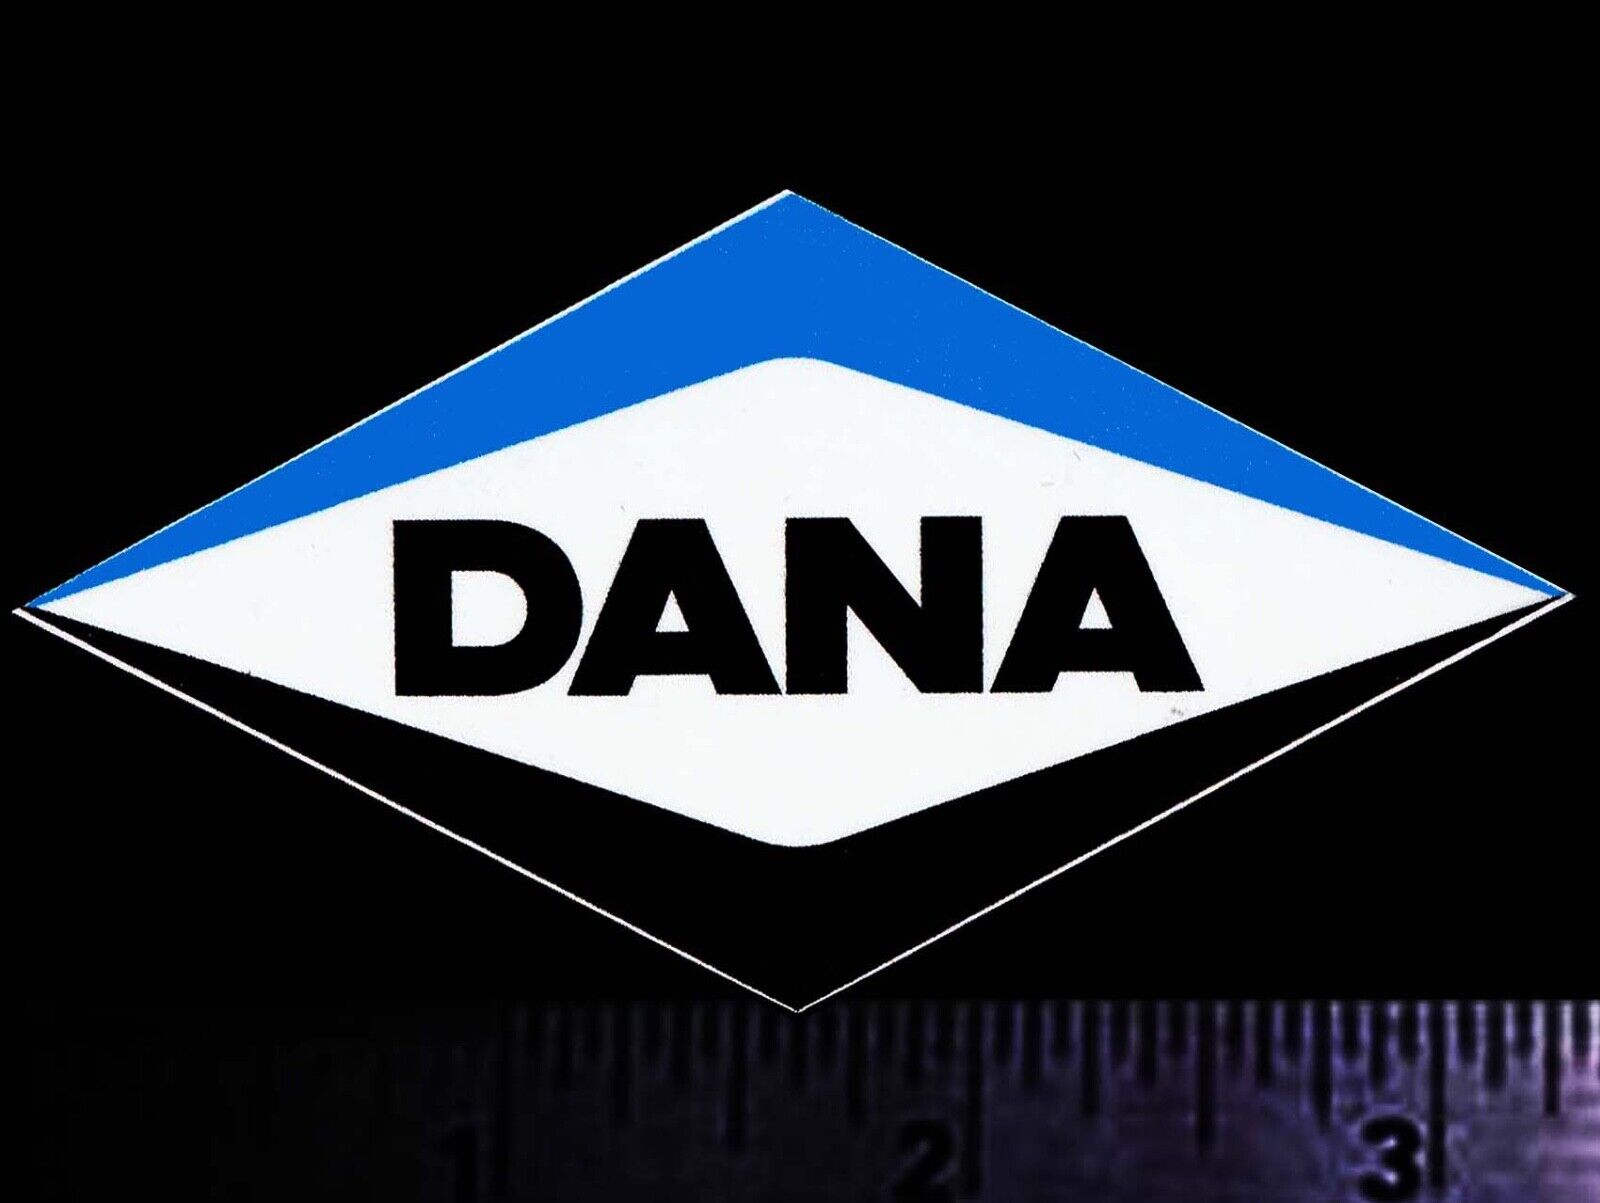 DANA Axles - Differentials - Gaskets - Original Vintage Racing Decal/Sticker